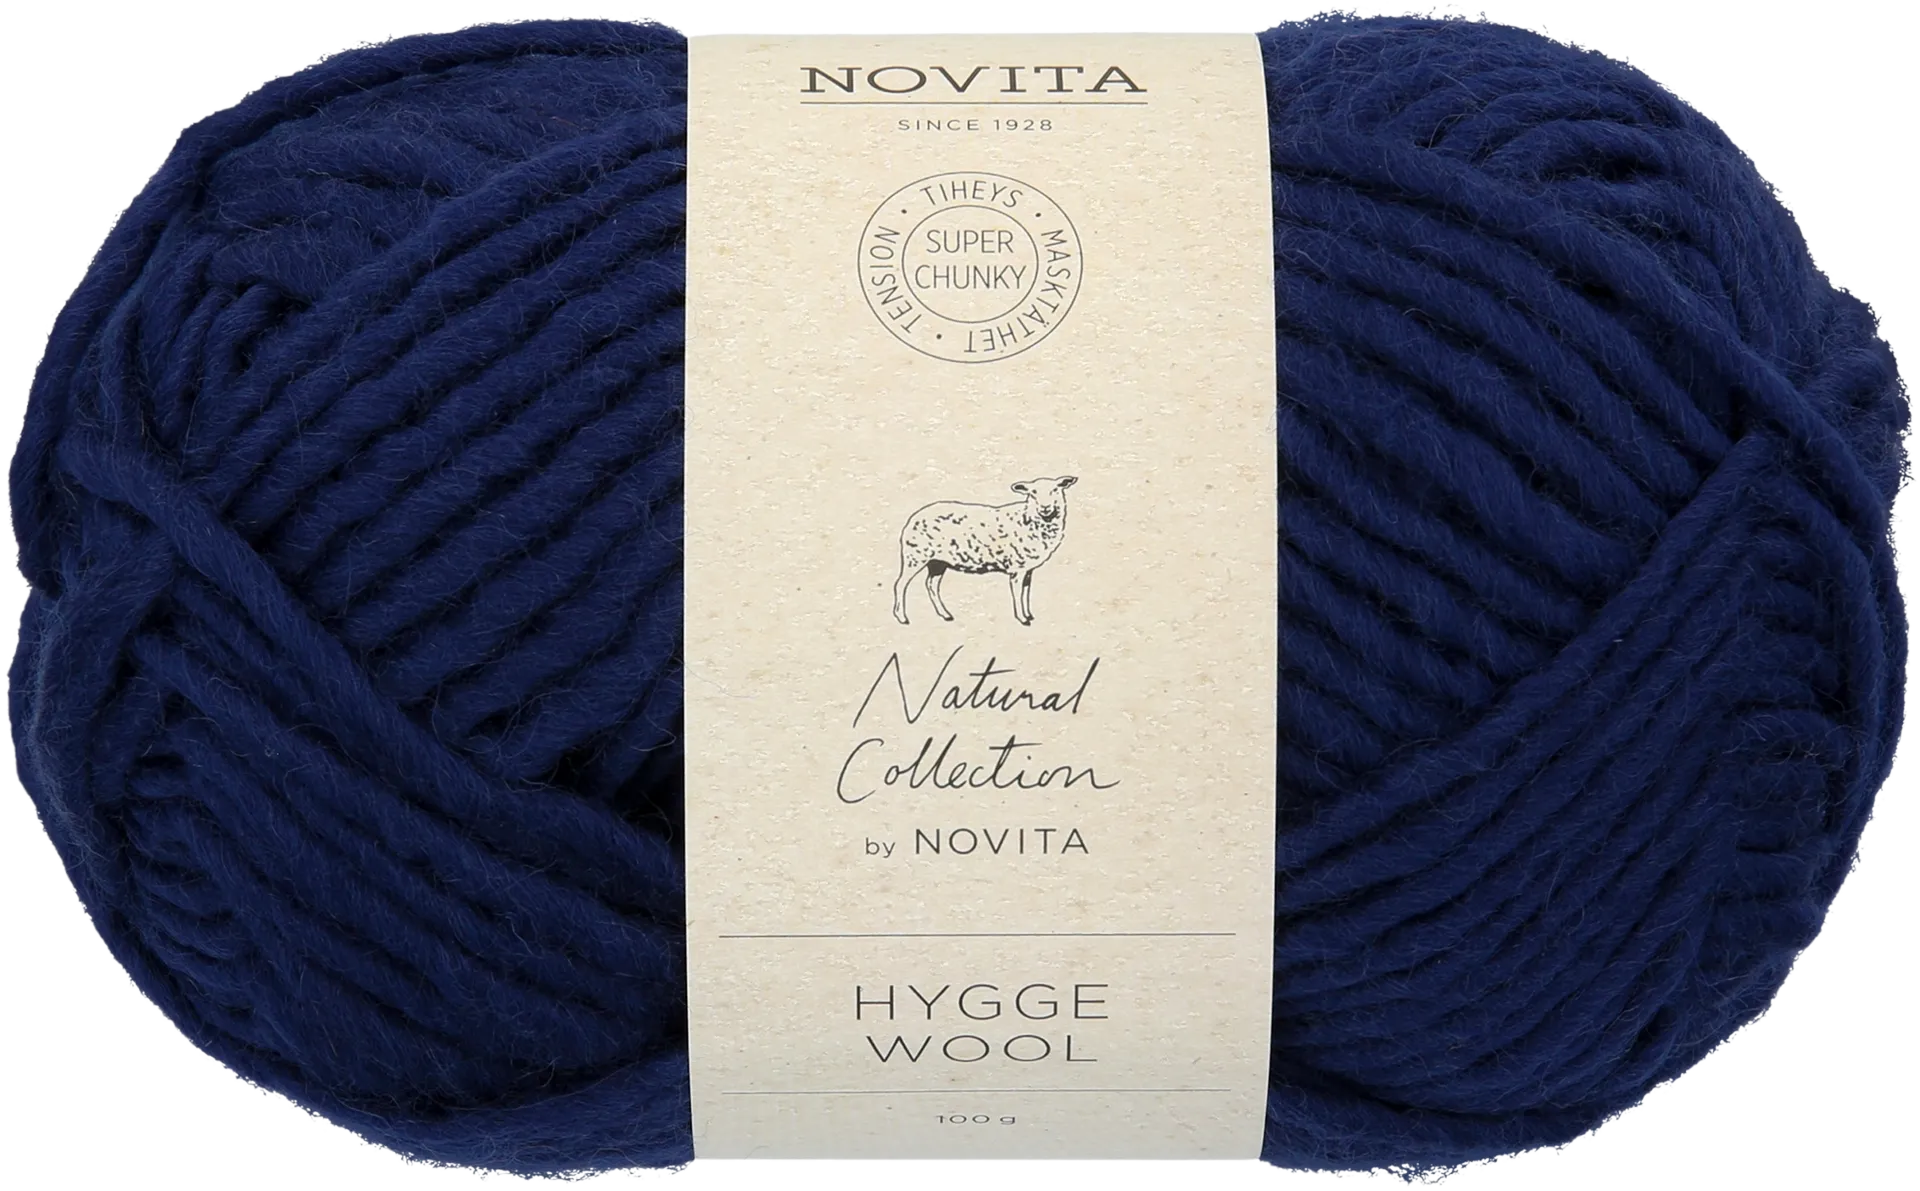 Novita Lanka Hygge Wool 100g aava 179 - 1